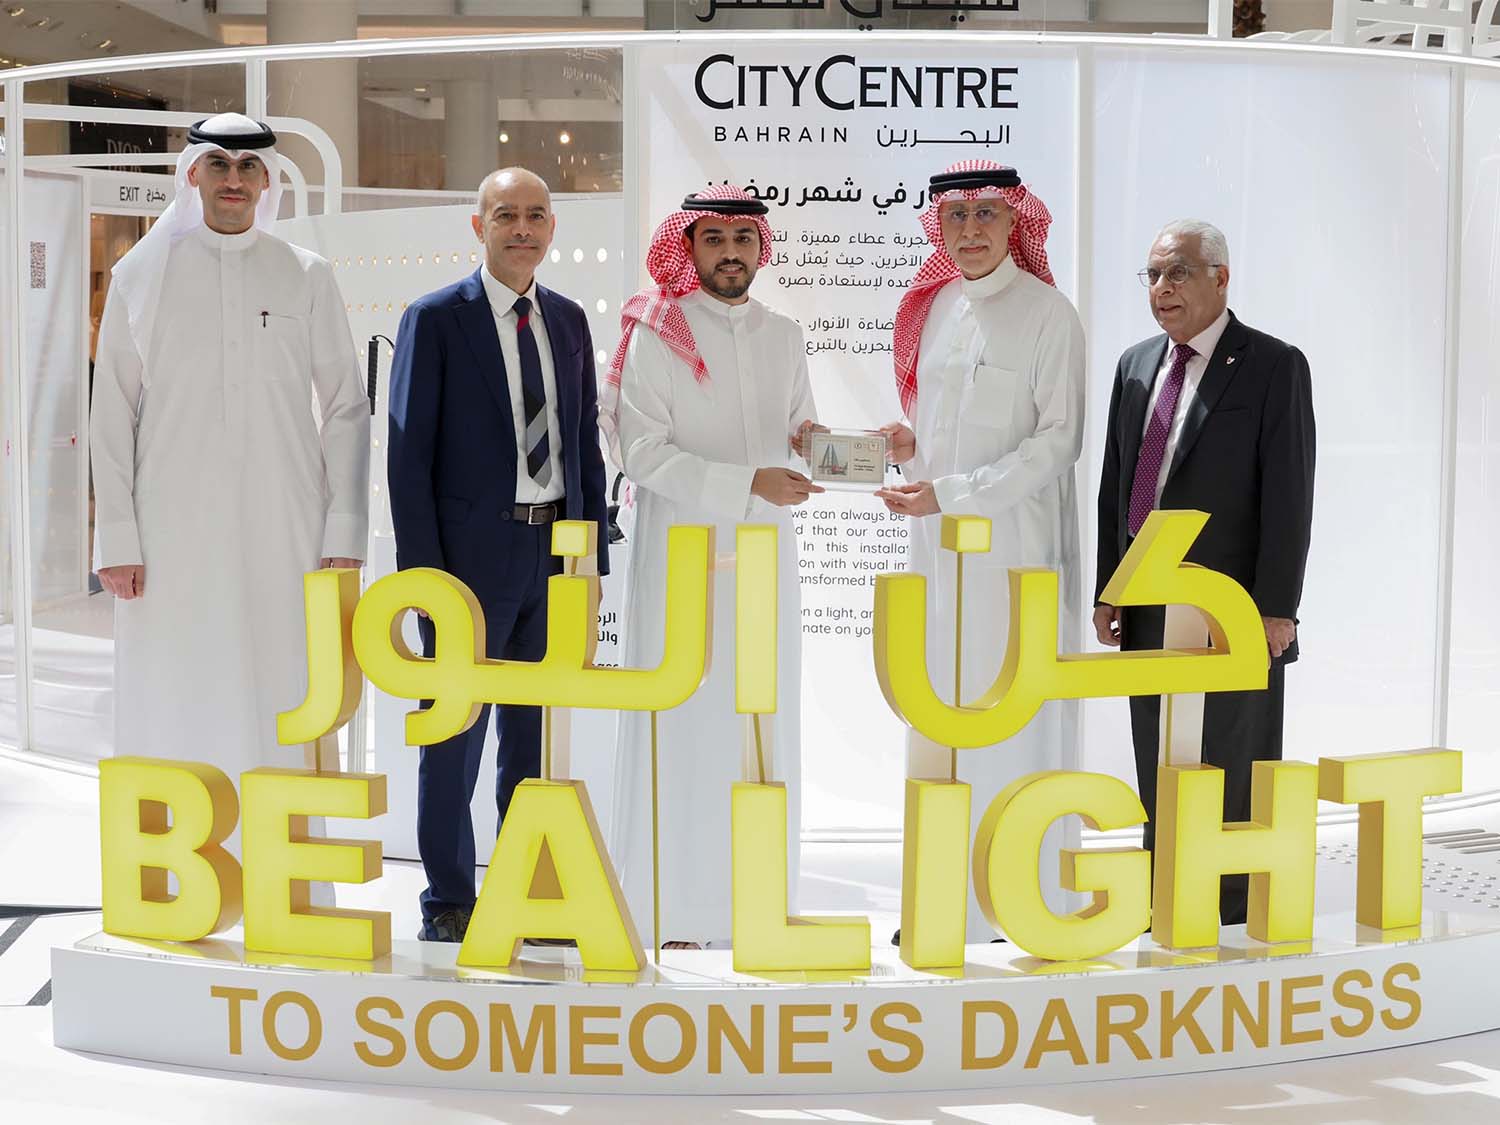 City Centre Bahrain’s #Bealight campaign